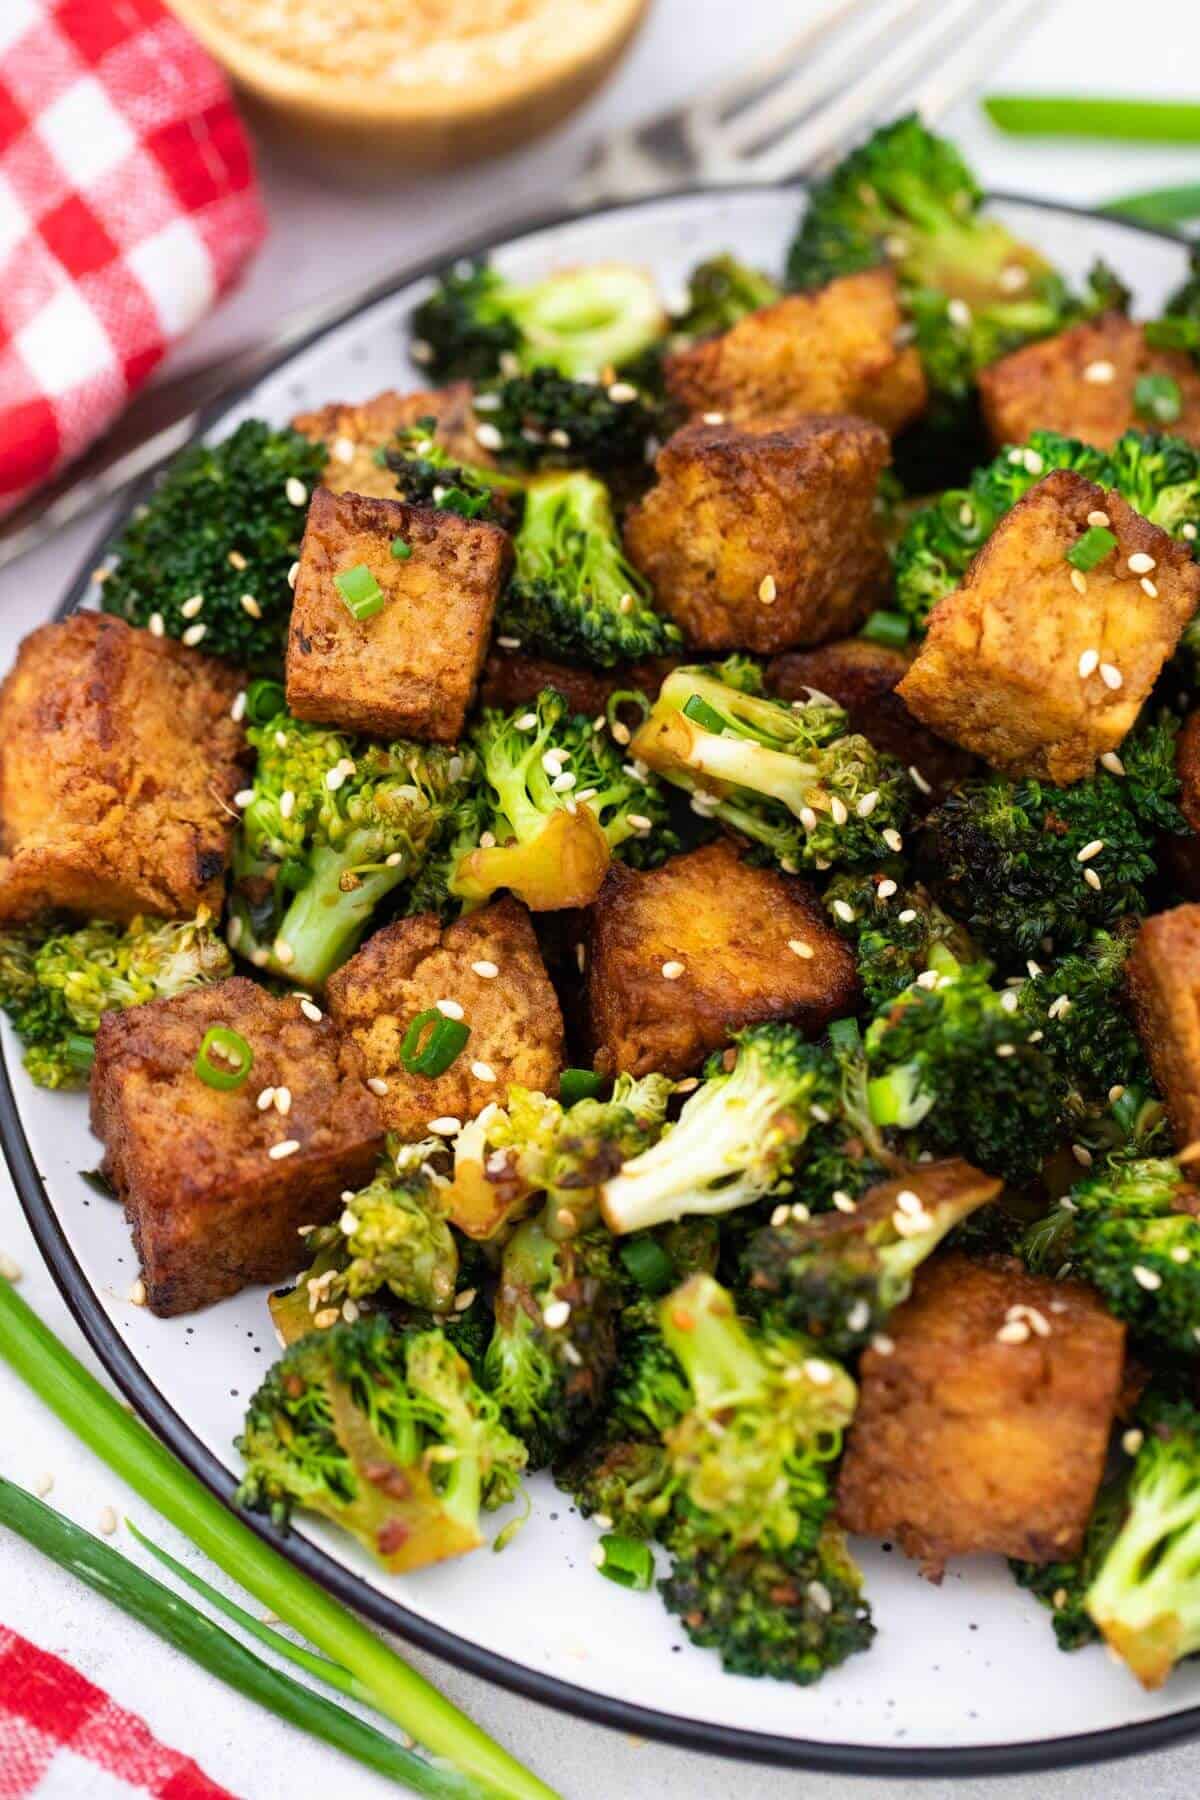 Tofu and broccoli on a plate.